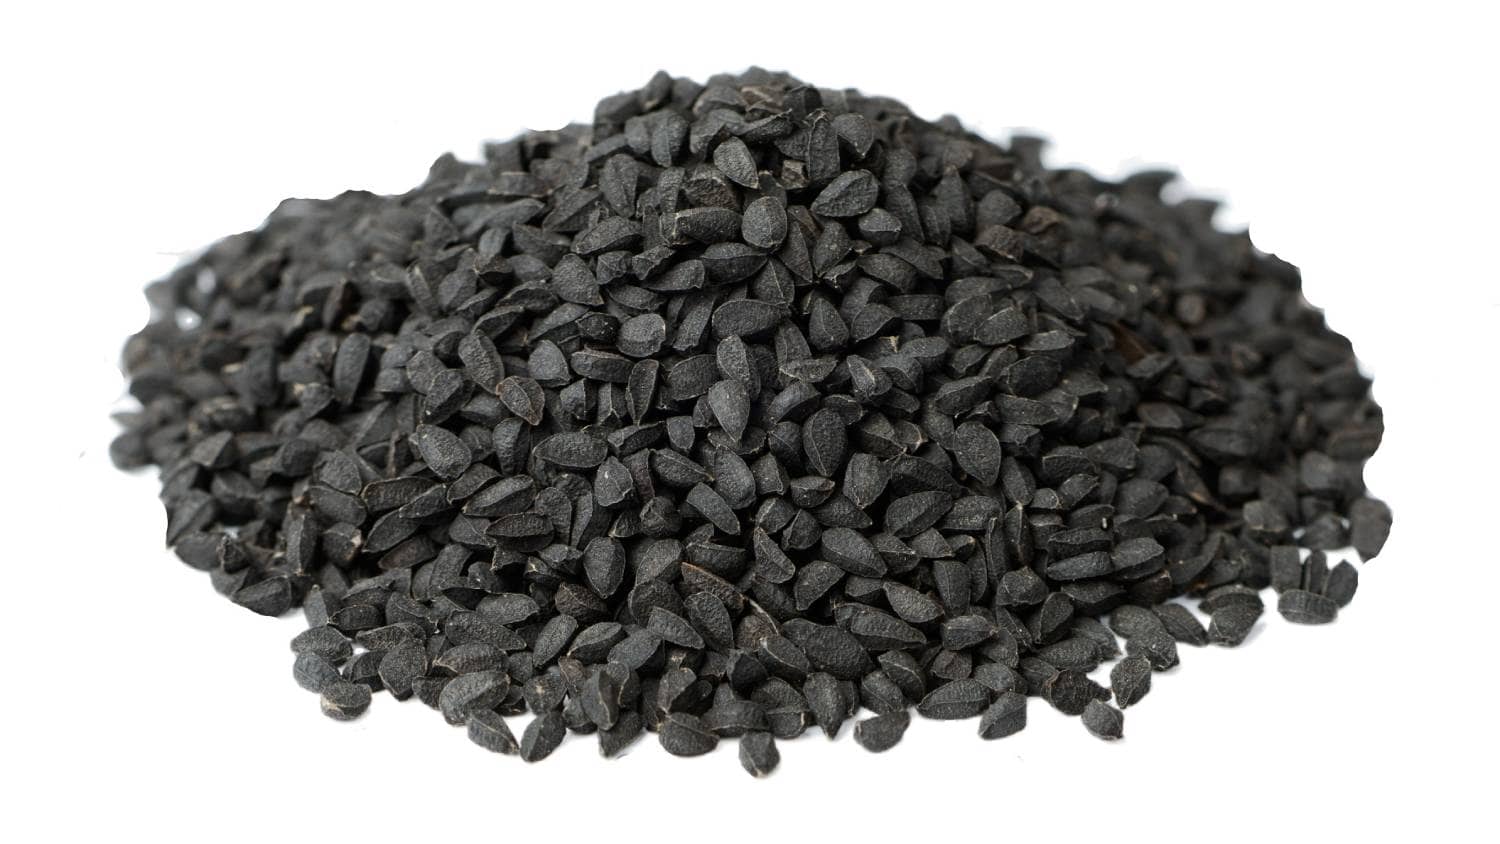 Nigella Seeds (Black Cumin Seeds)